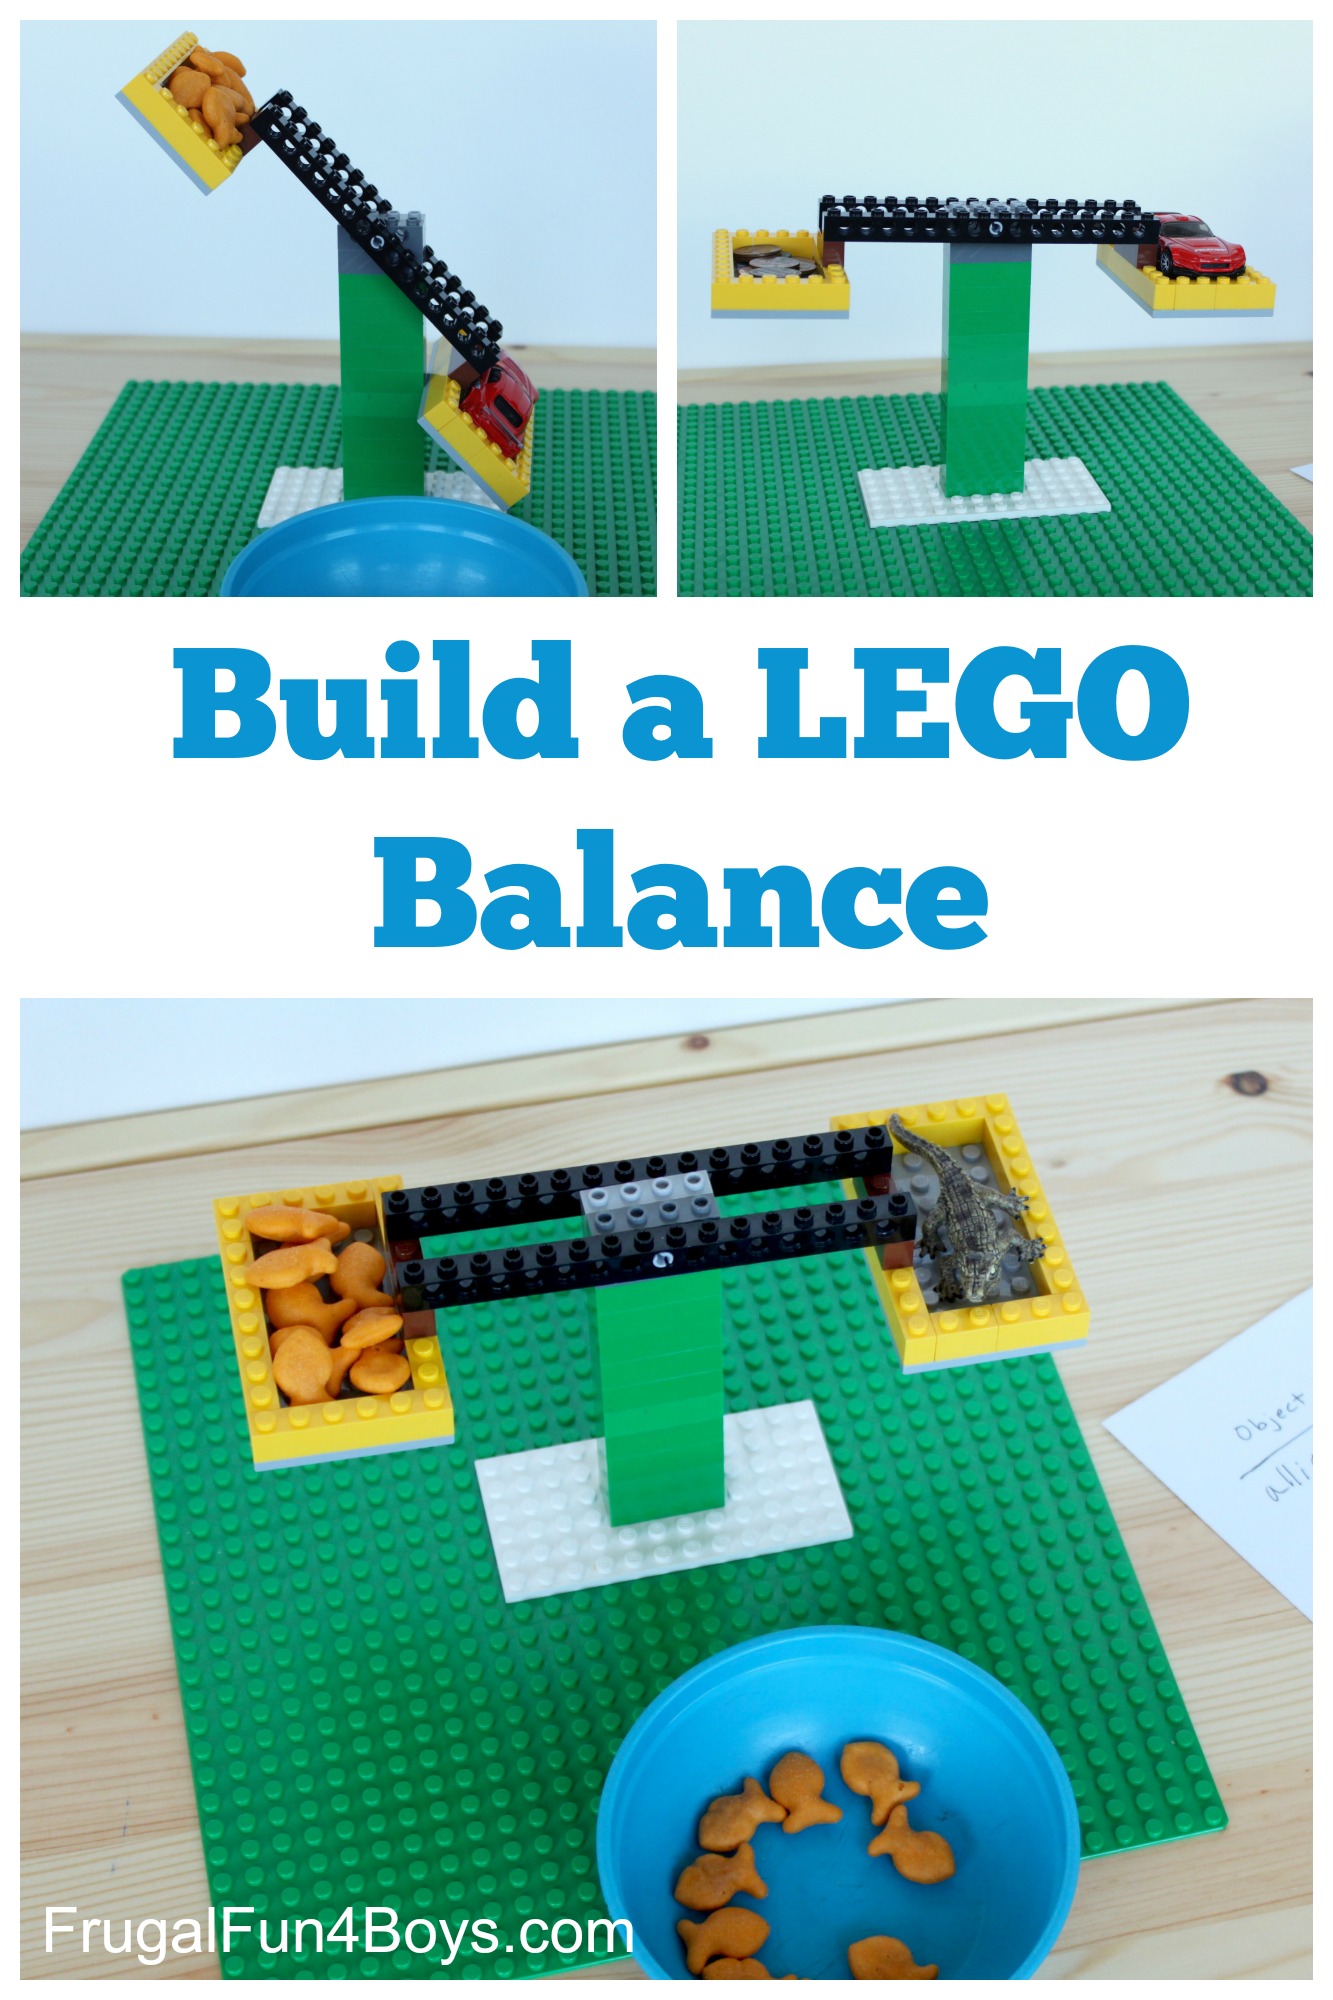 Build a LEGO Balance - Math Activity for Kids